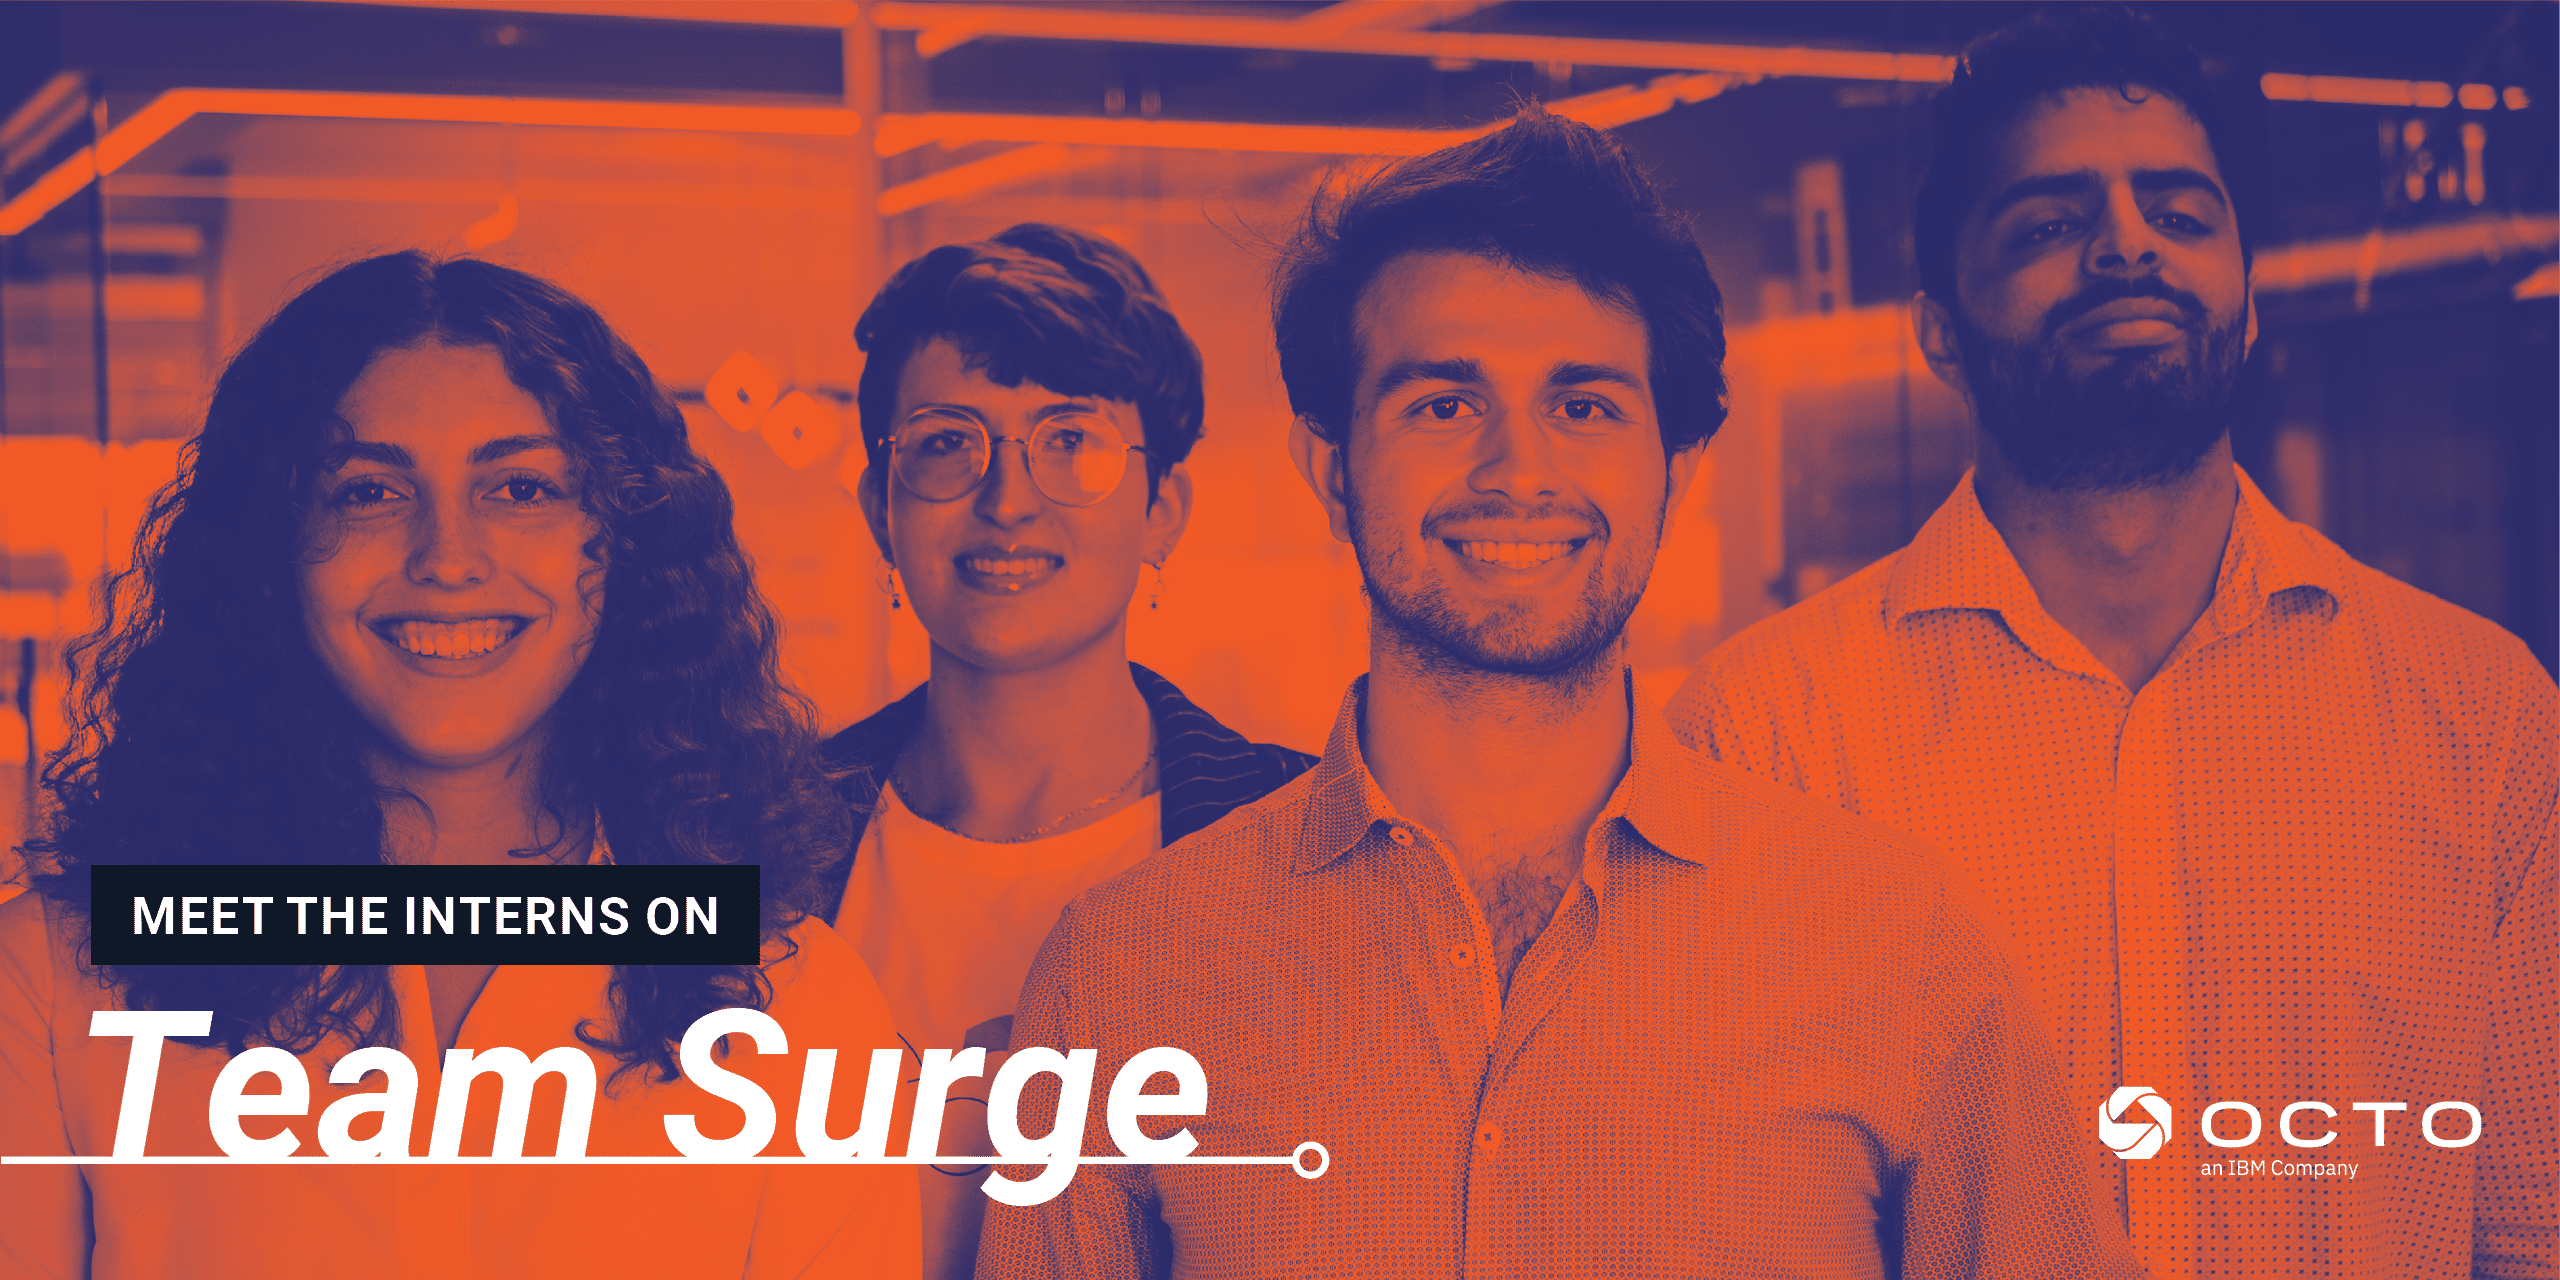 Meet the interns on Team Surge